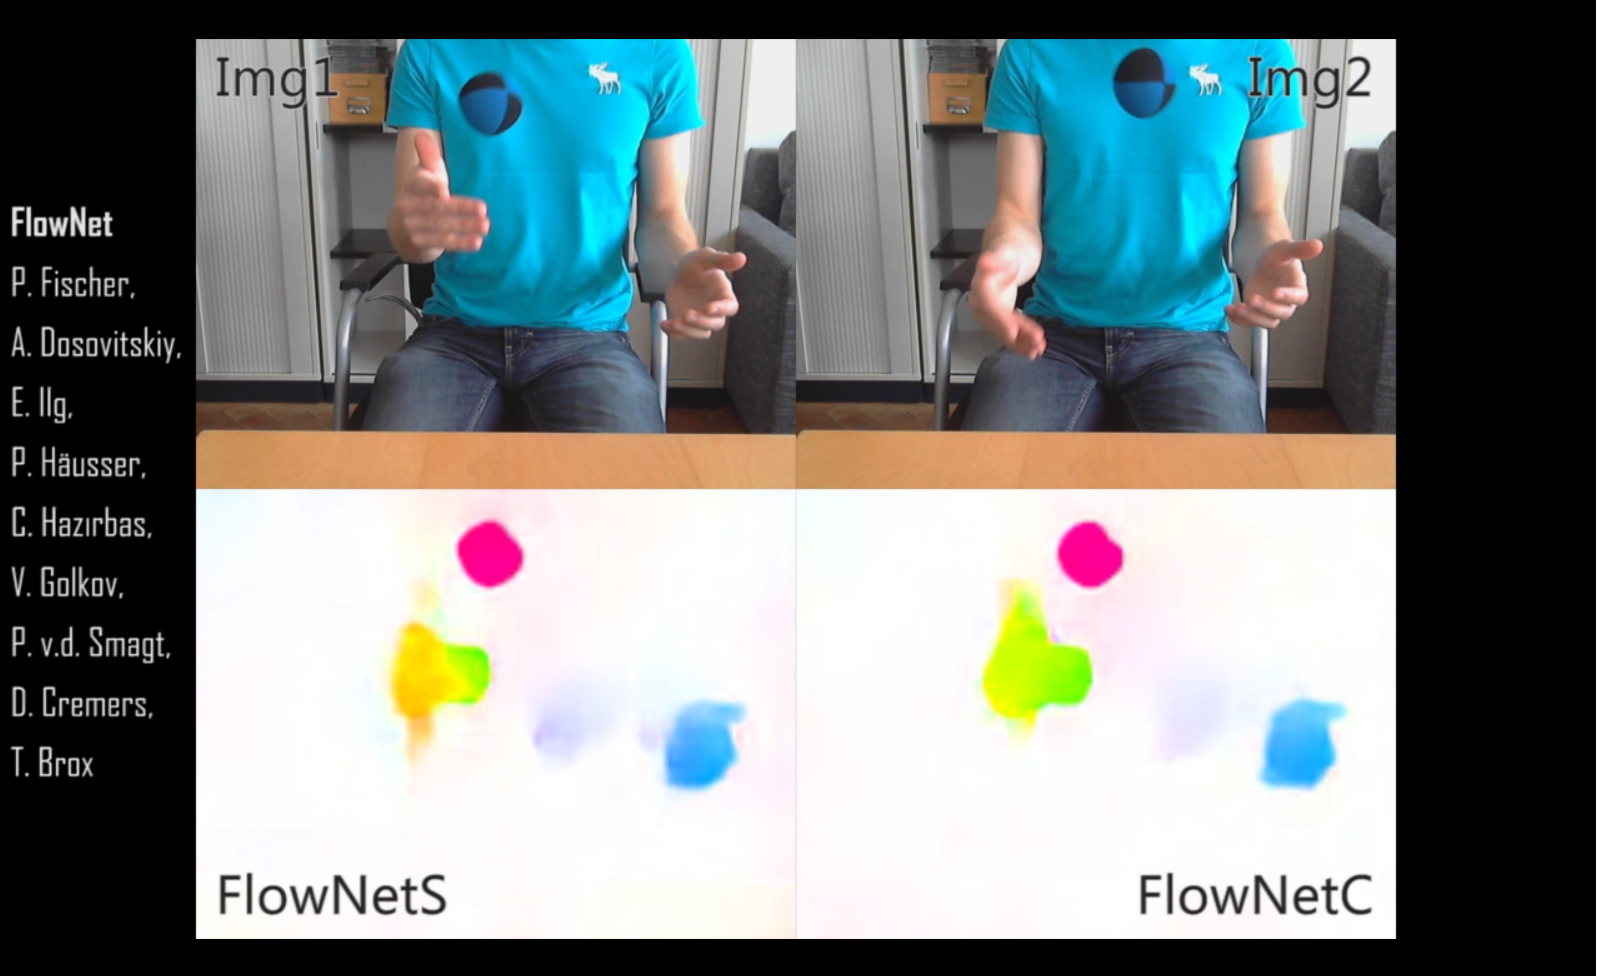 Demo video of FlowNets